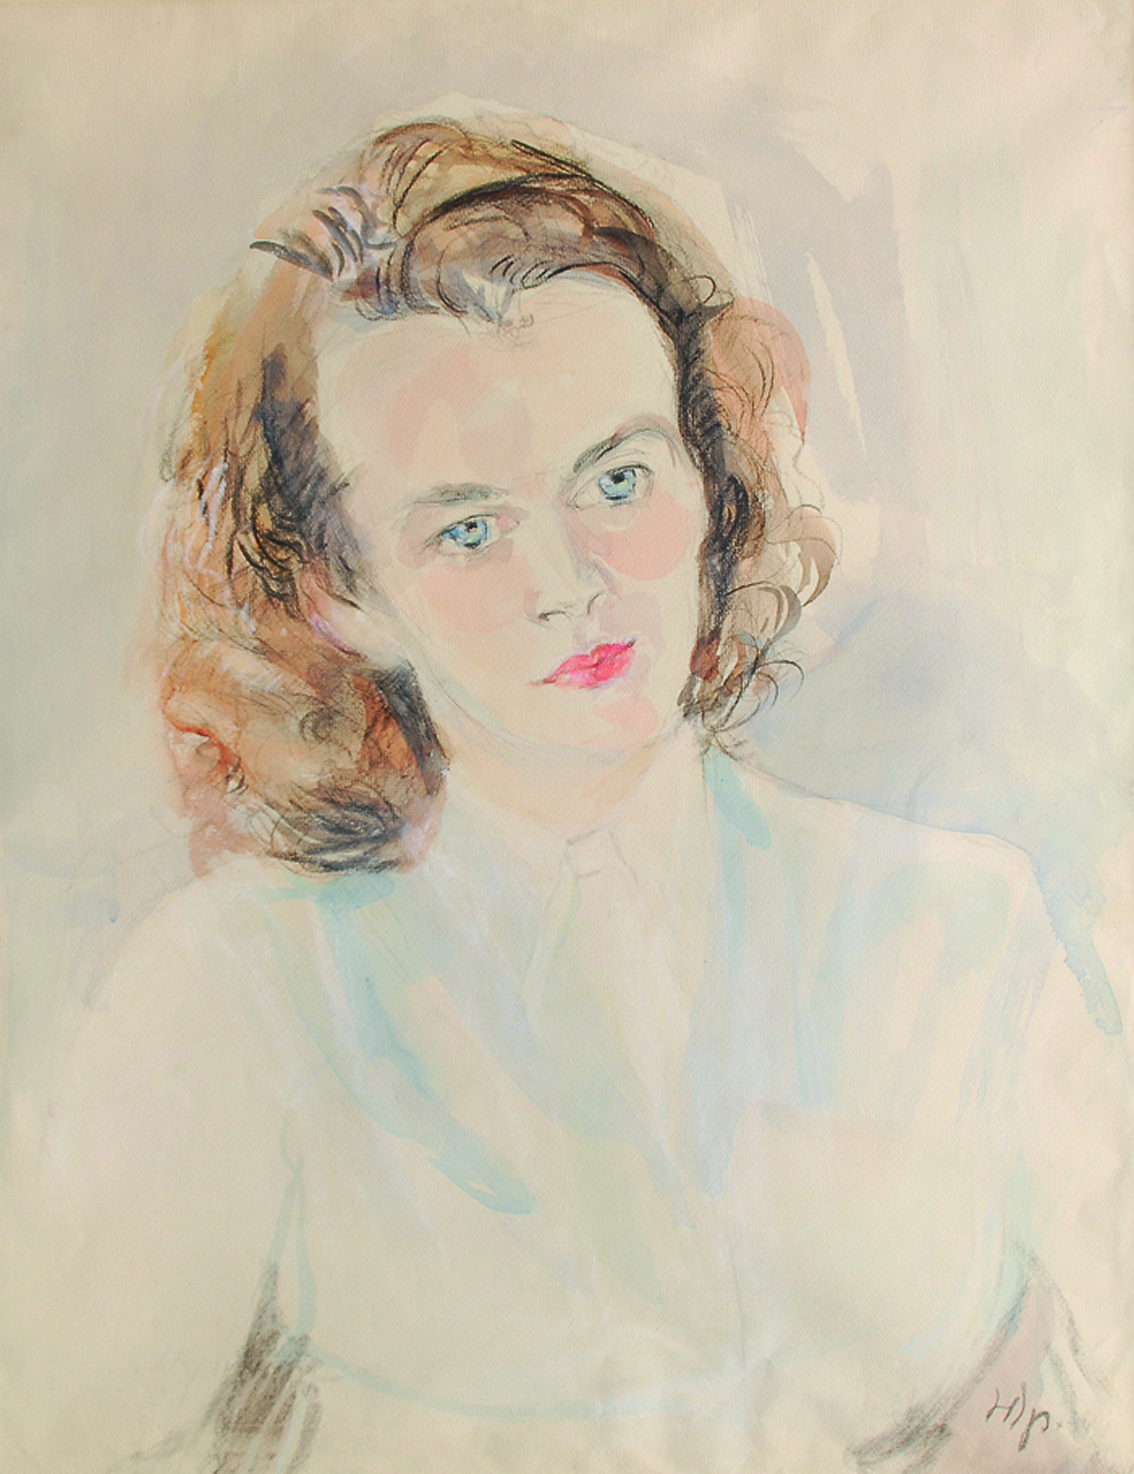 A female portrait